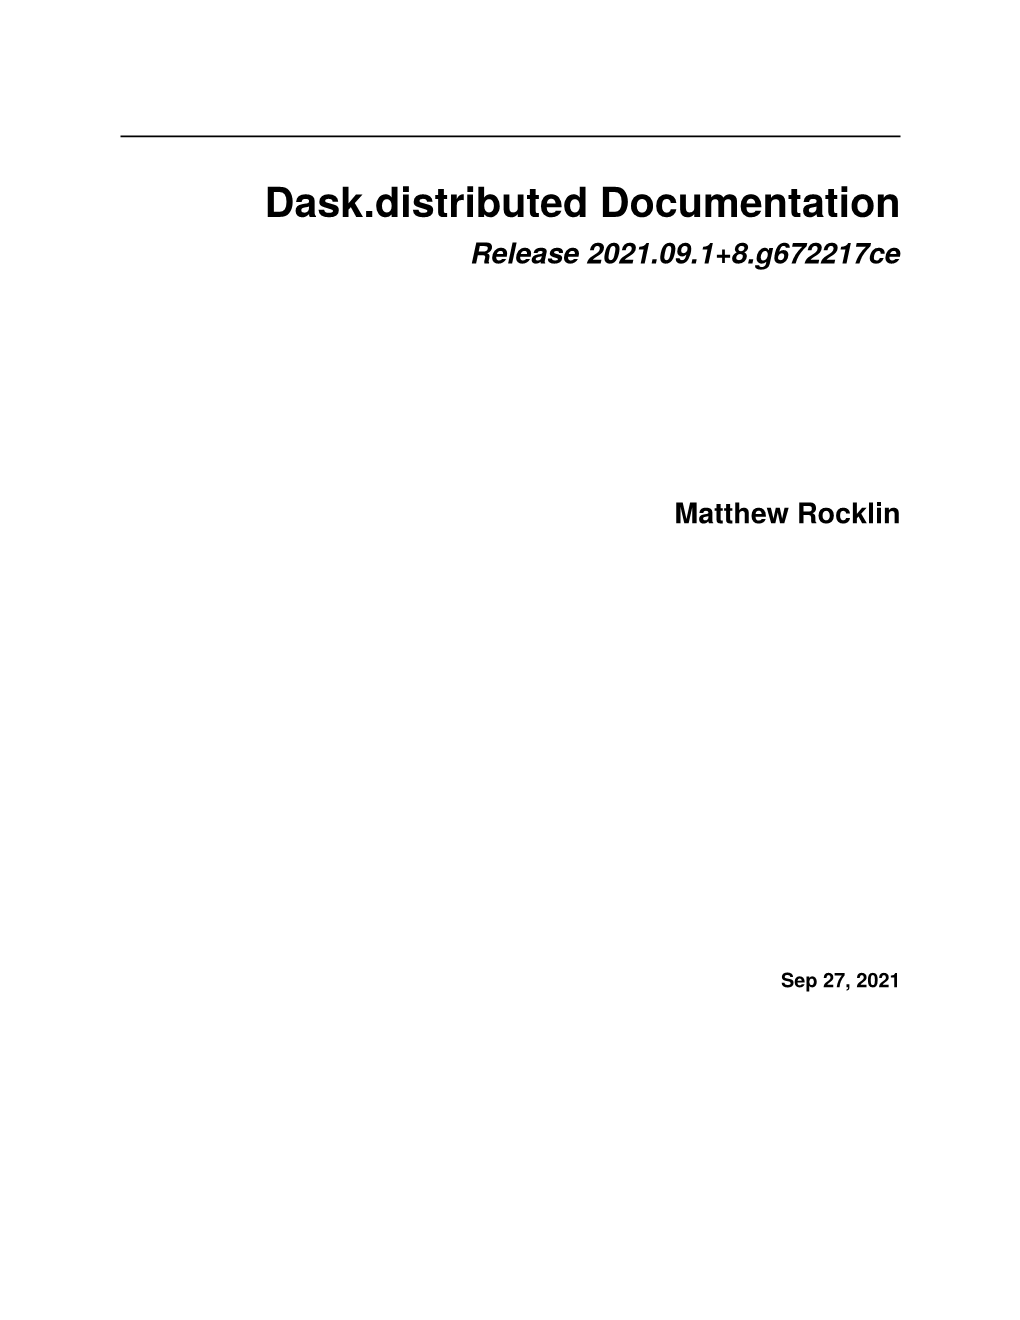 Latest Version of Dask.Distributed from the Conda-Forge Repository Using Conda: Conda Install Dask Distributed-C Conda-Forge